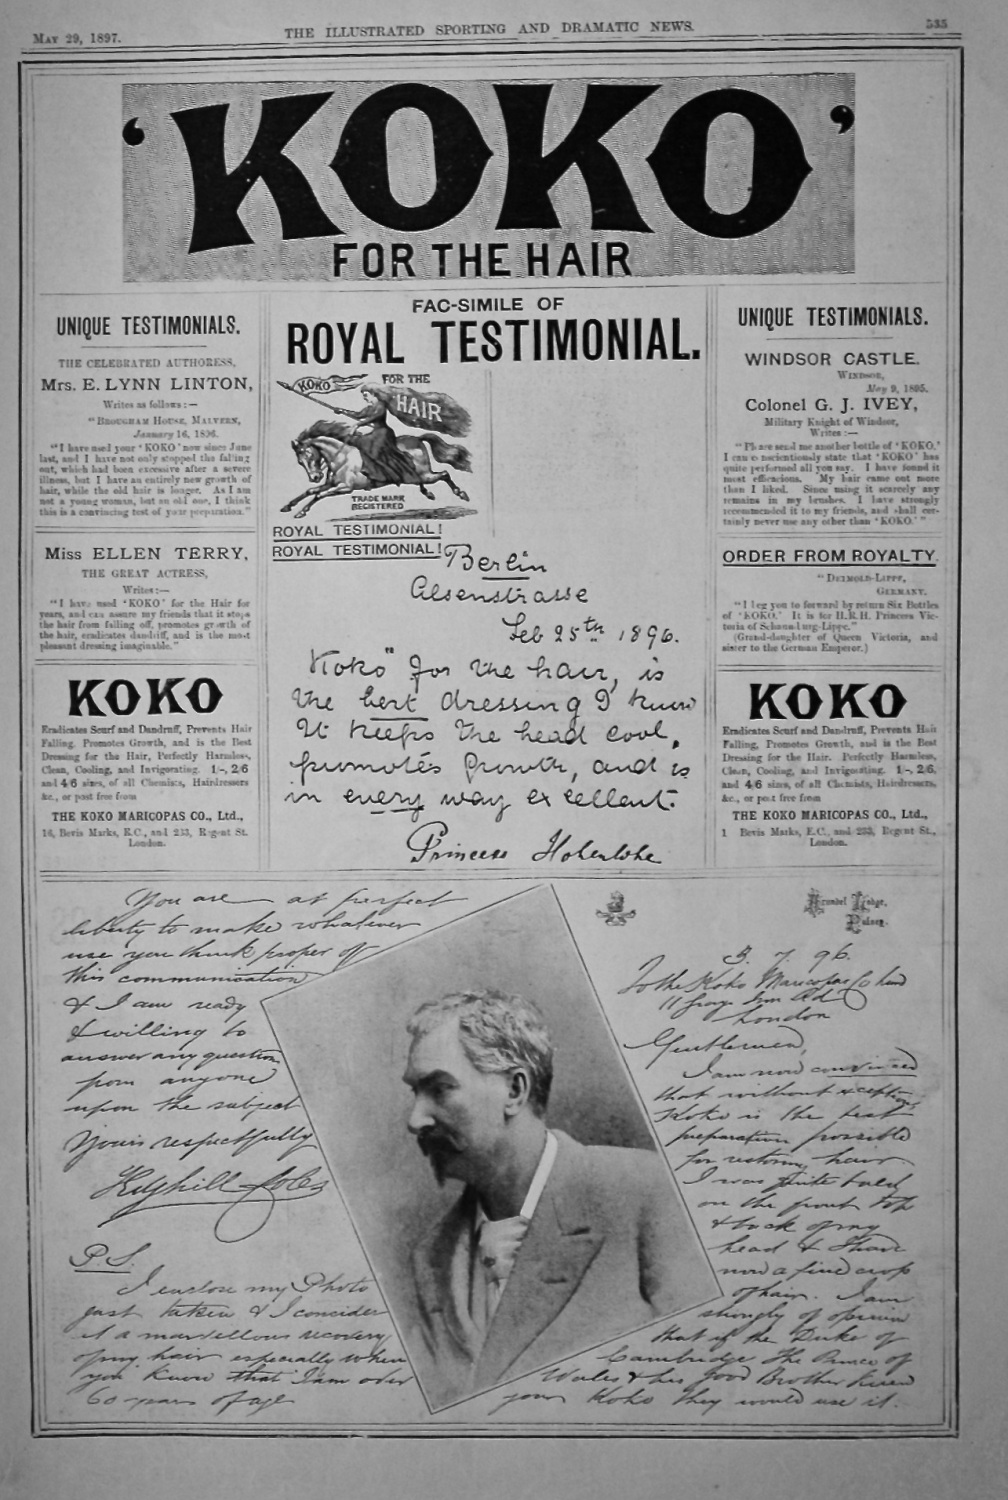 'KOKO' for the Hair.  1897.